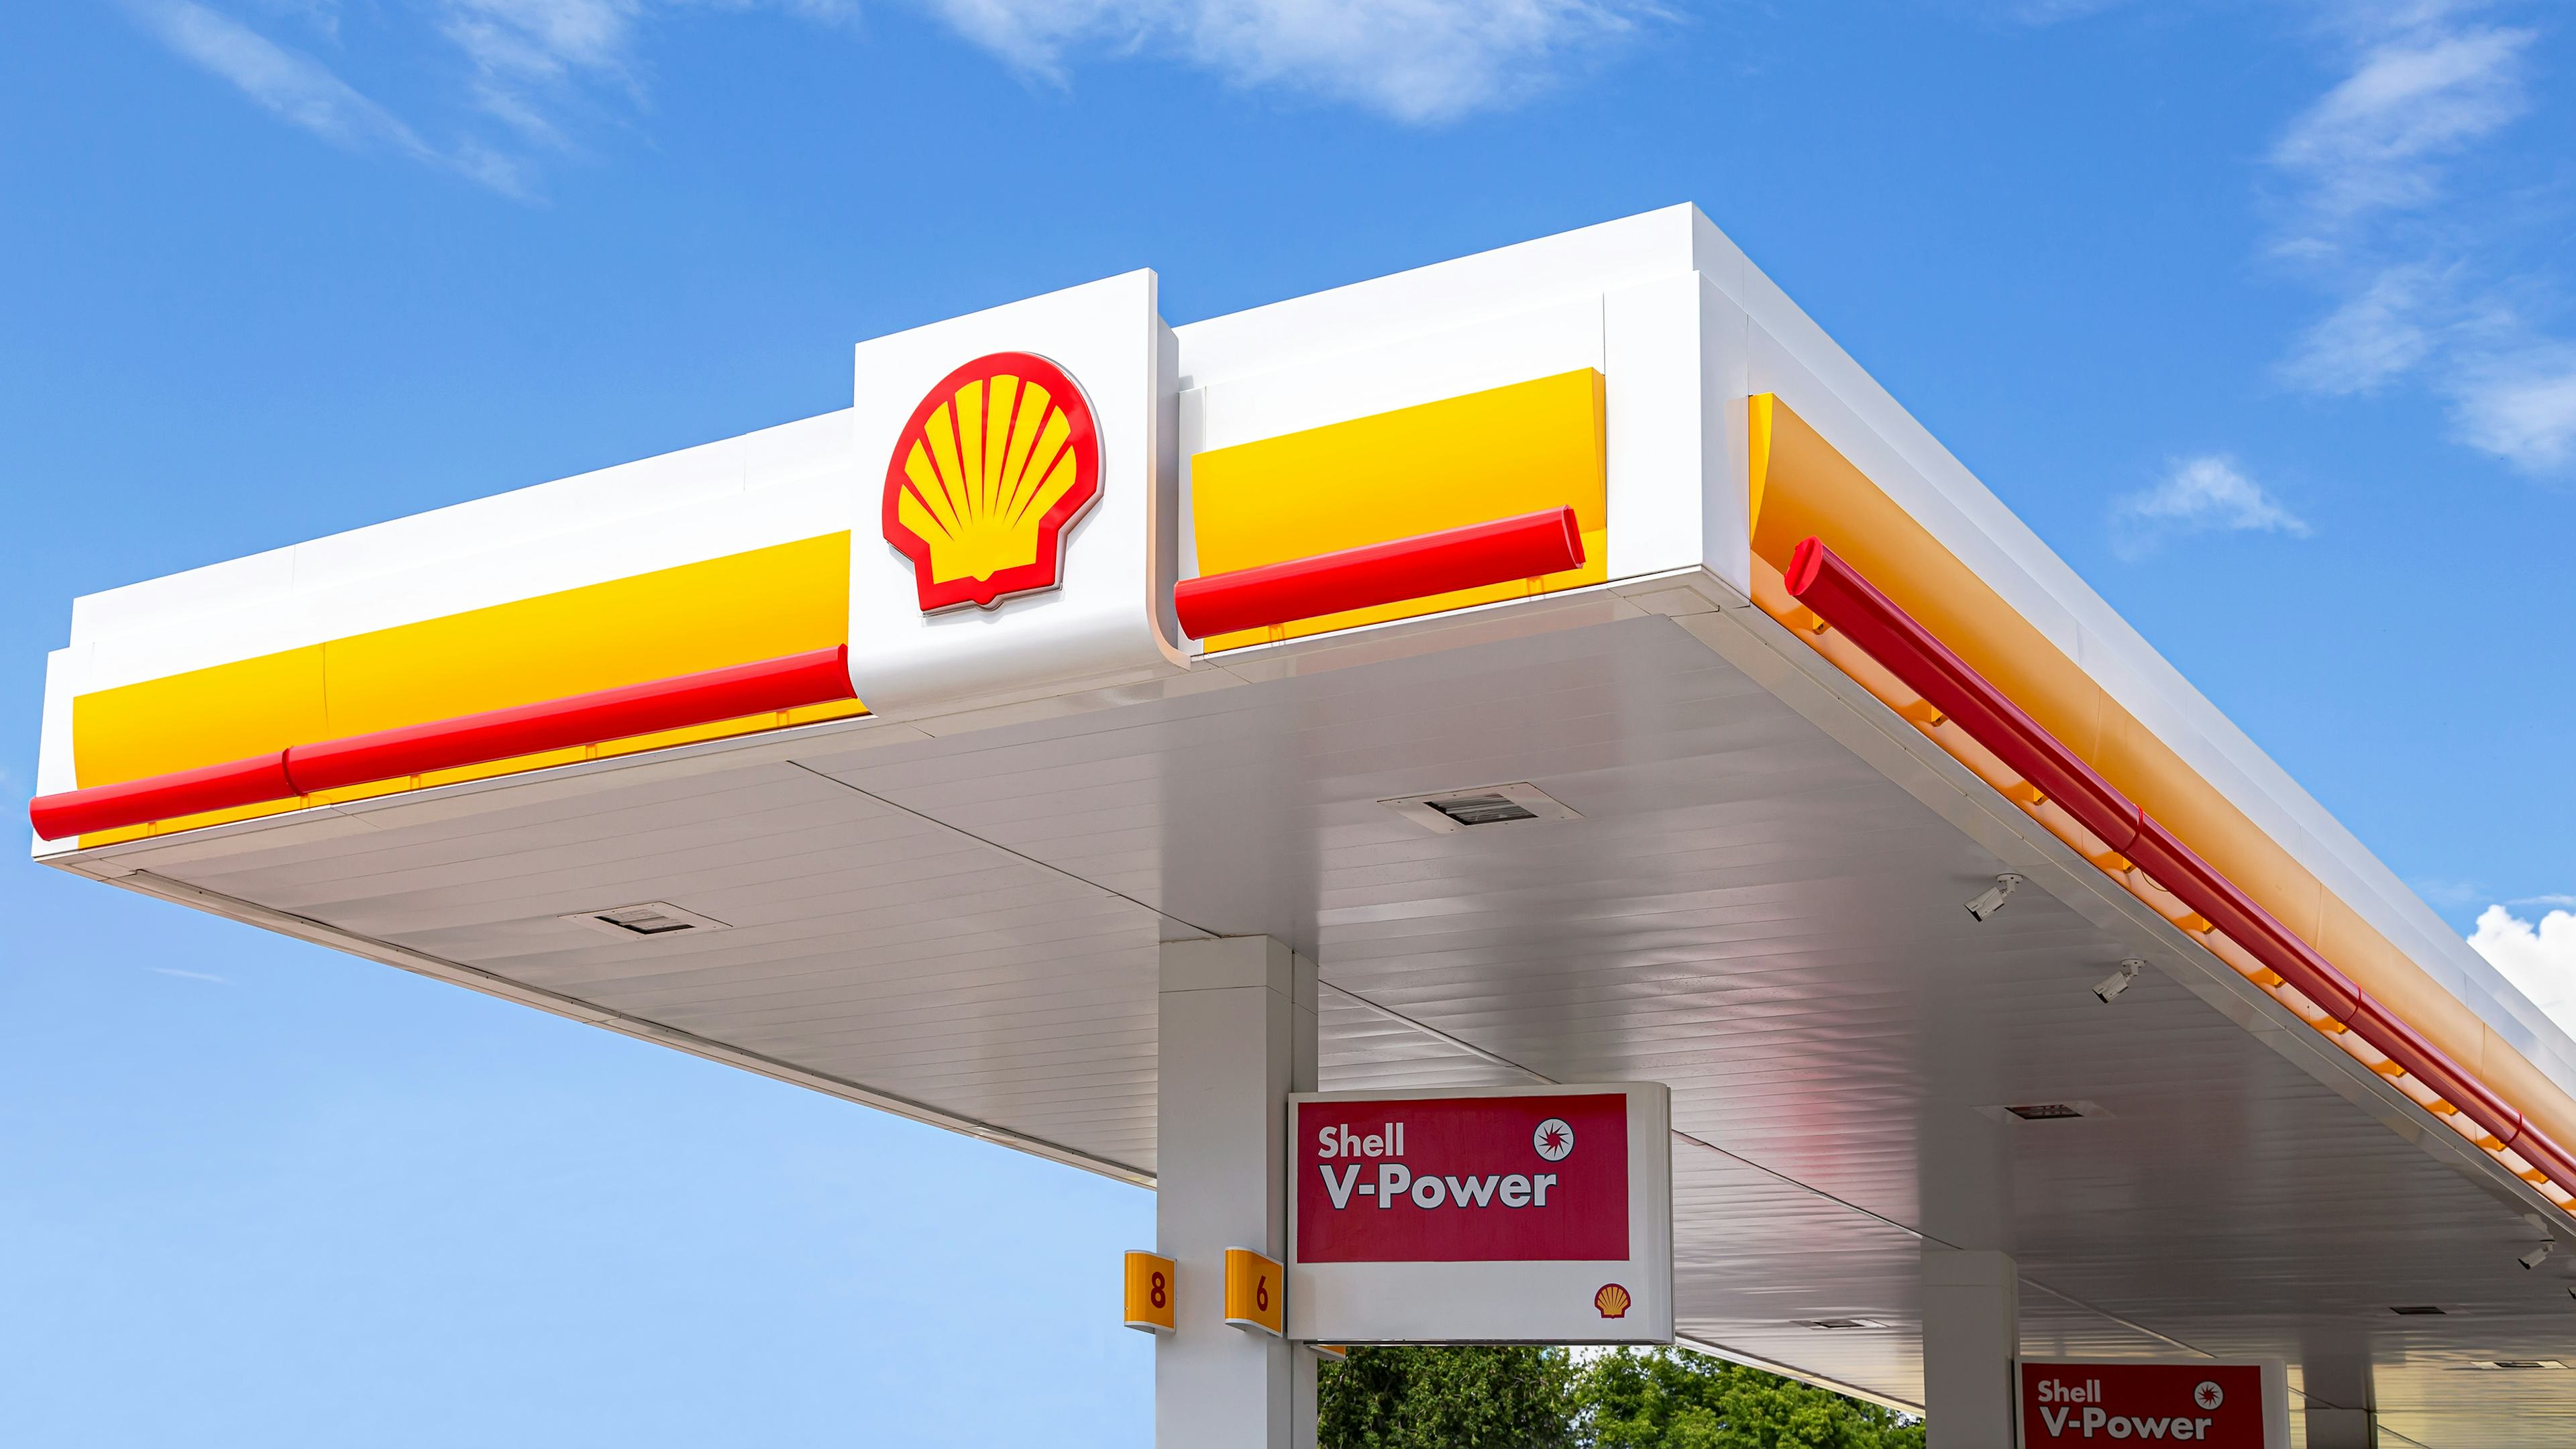 Shell gas station overhand V-Power sign